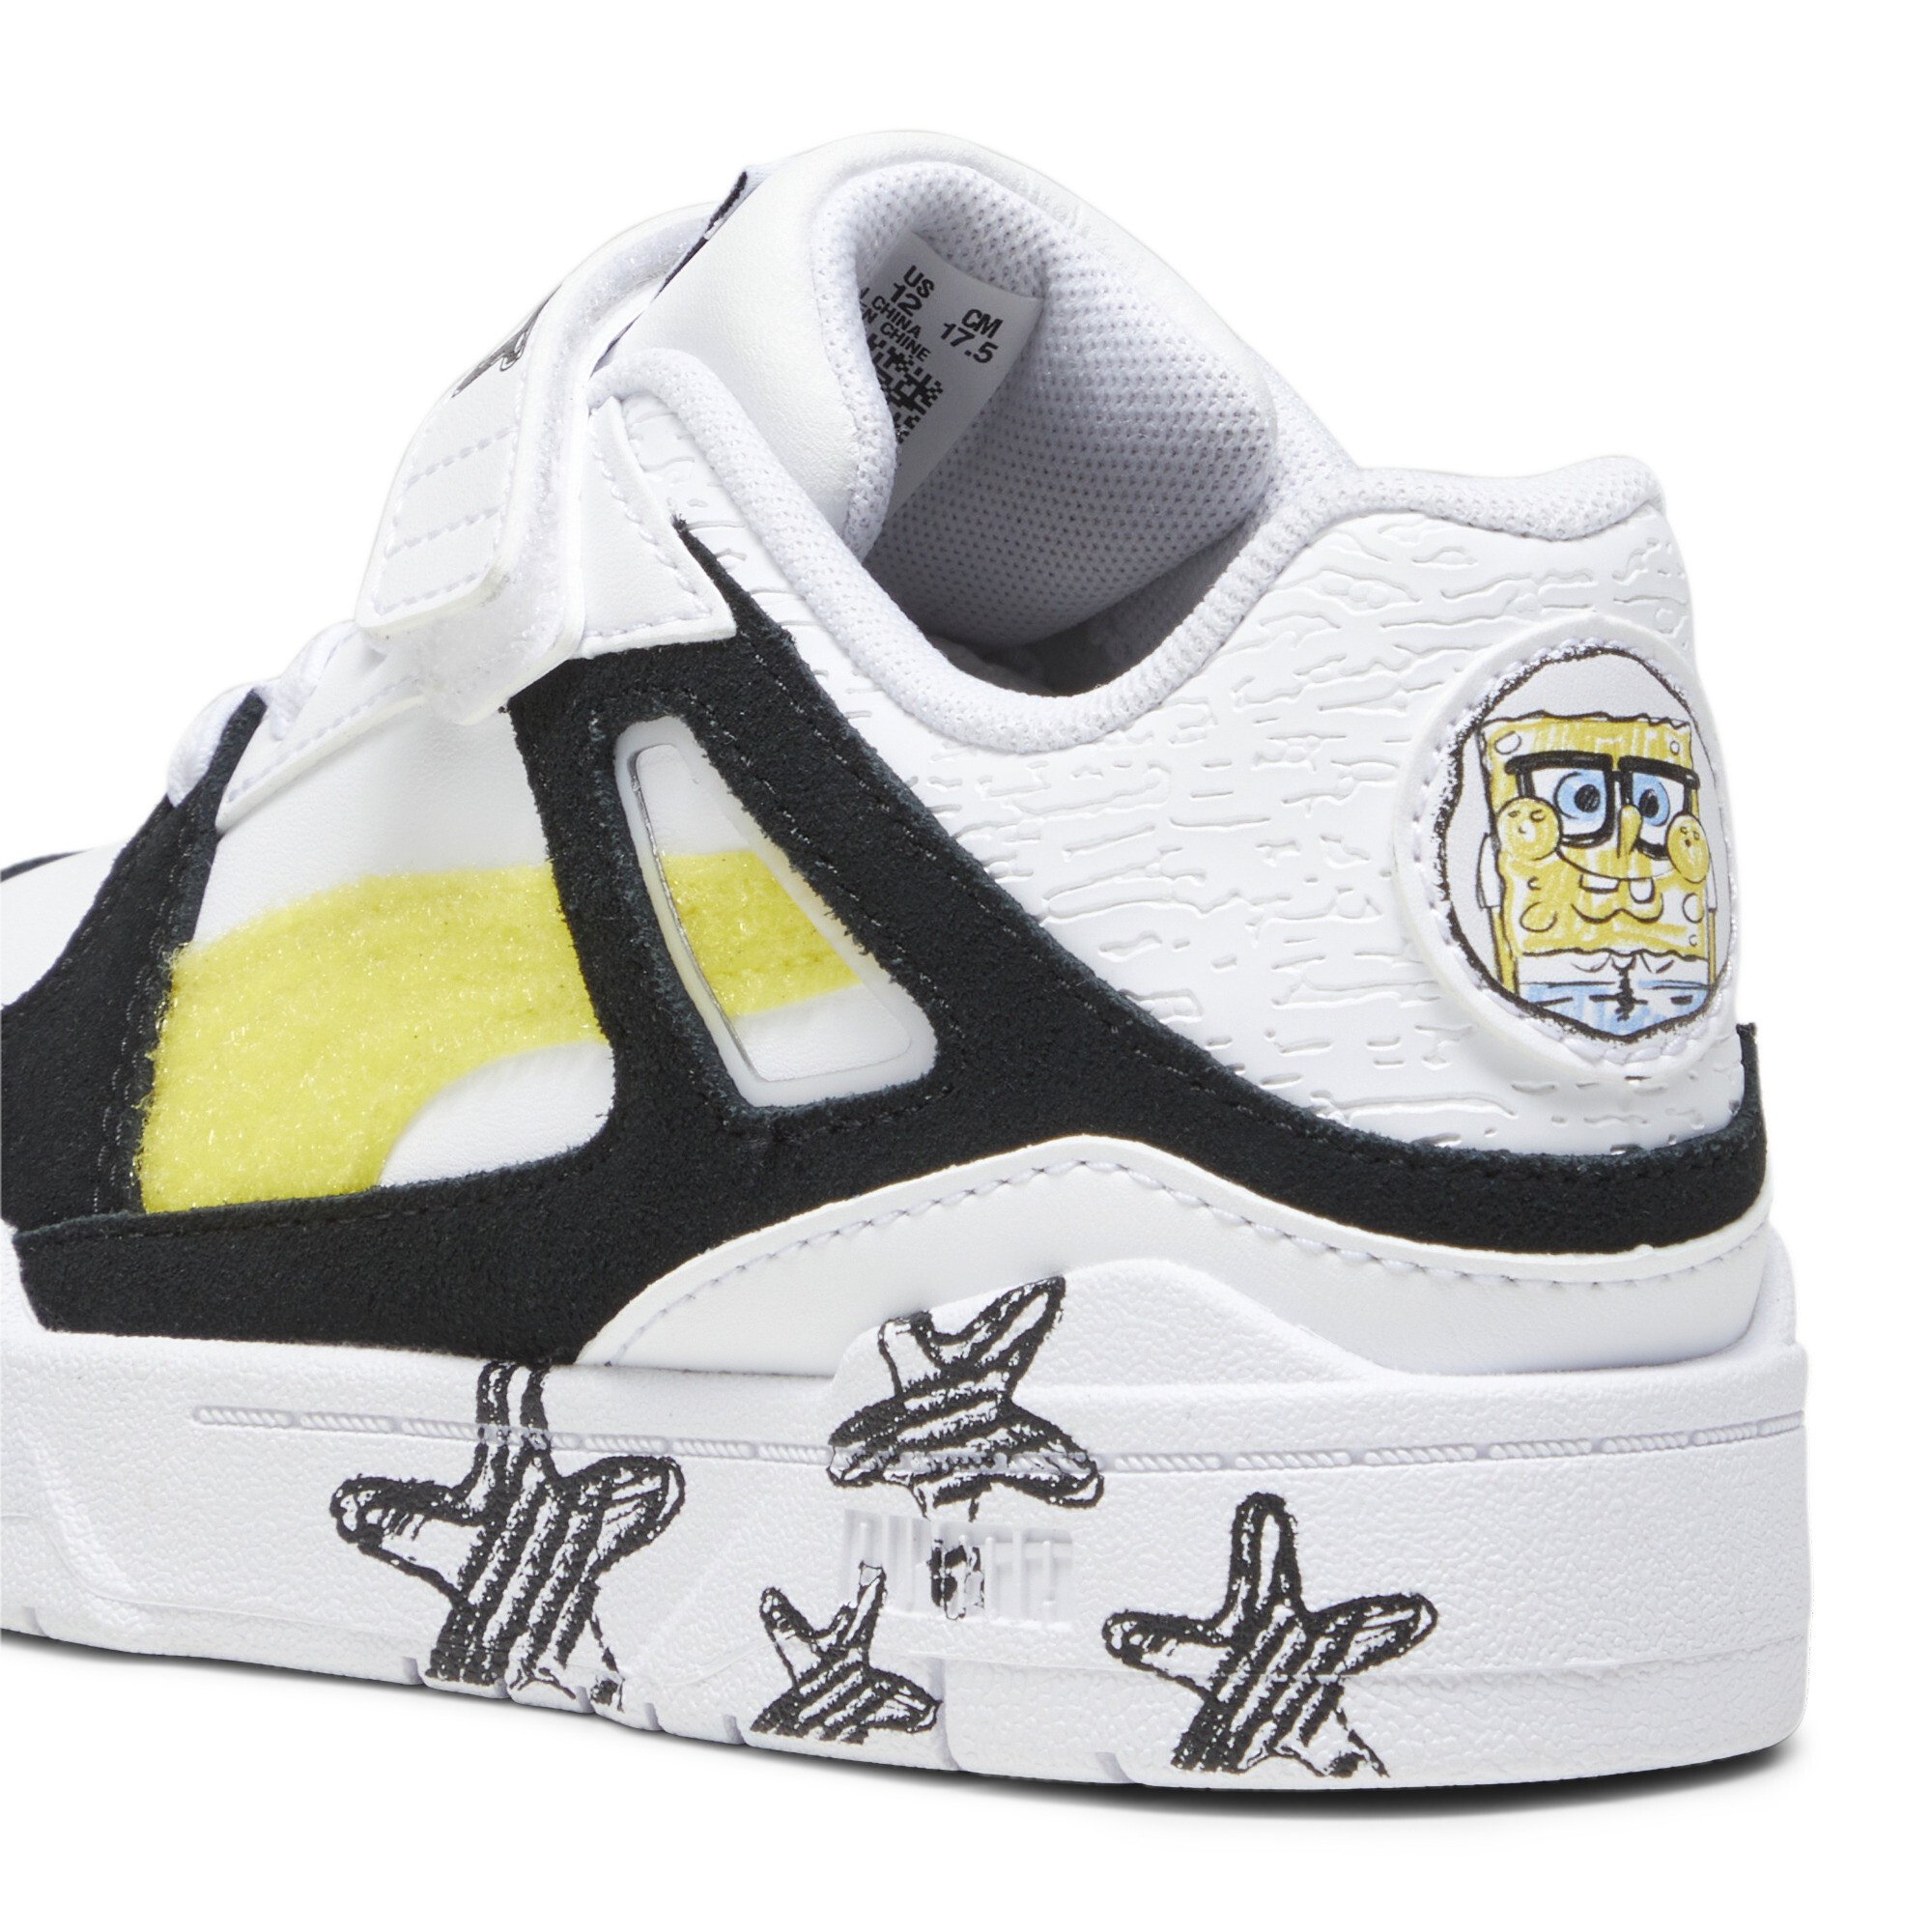 Kids' PUMA X SPONGEBOB SQUAREPANTS Slipstream Sneakers In White, Size EU 28